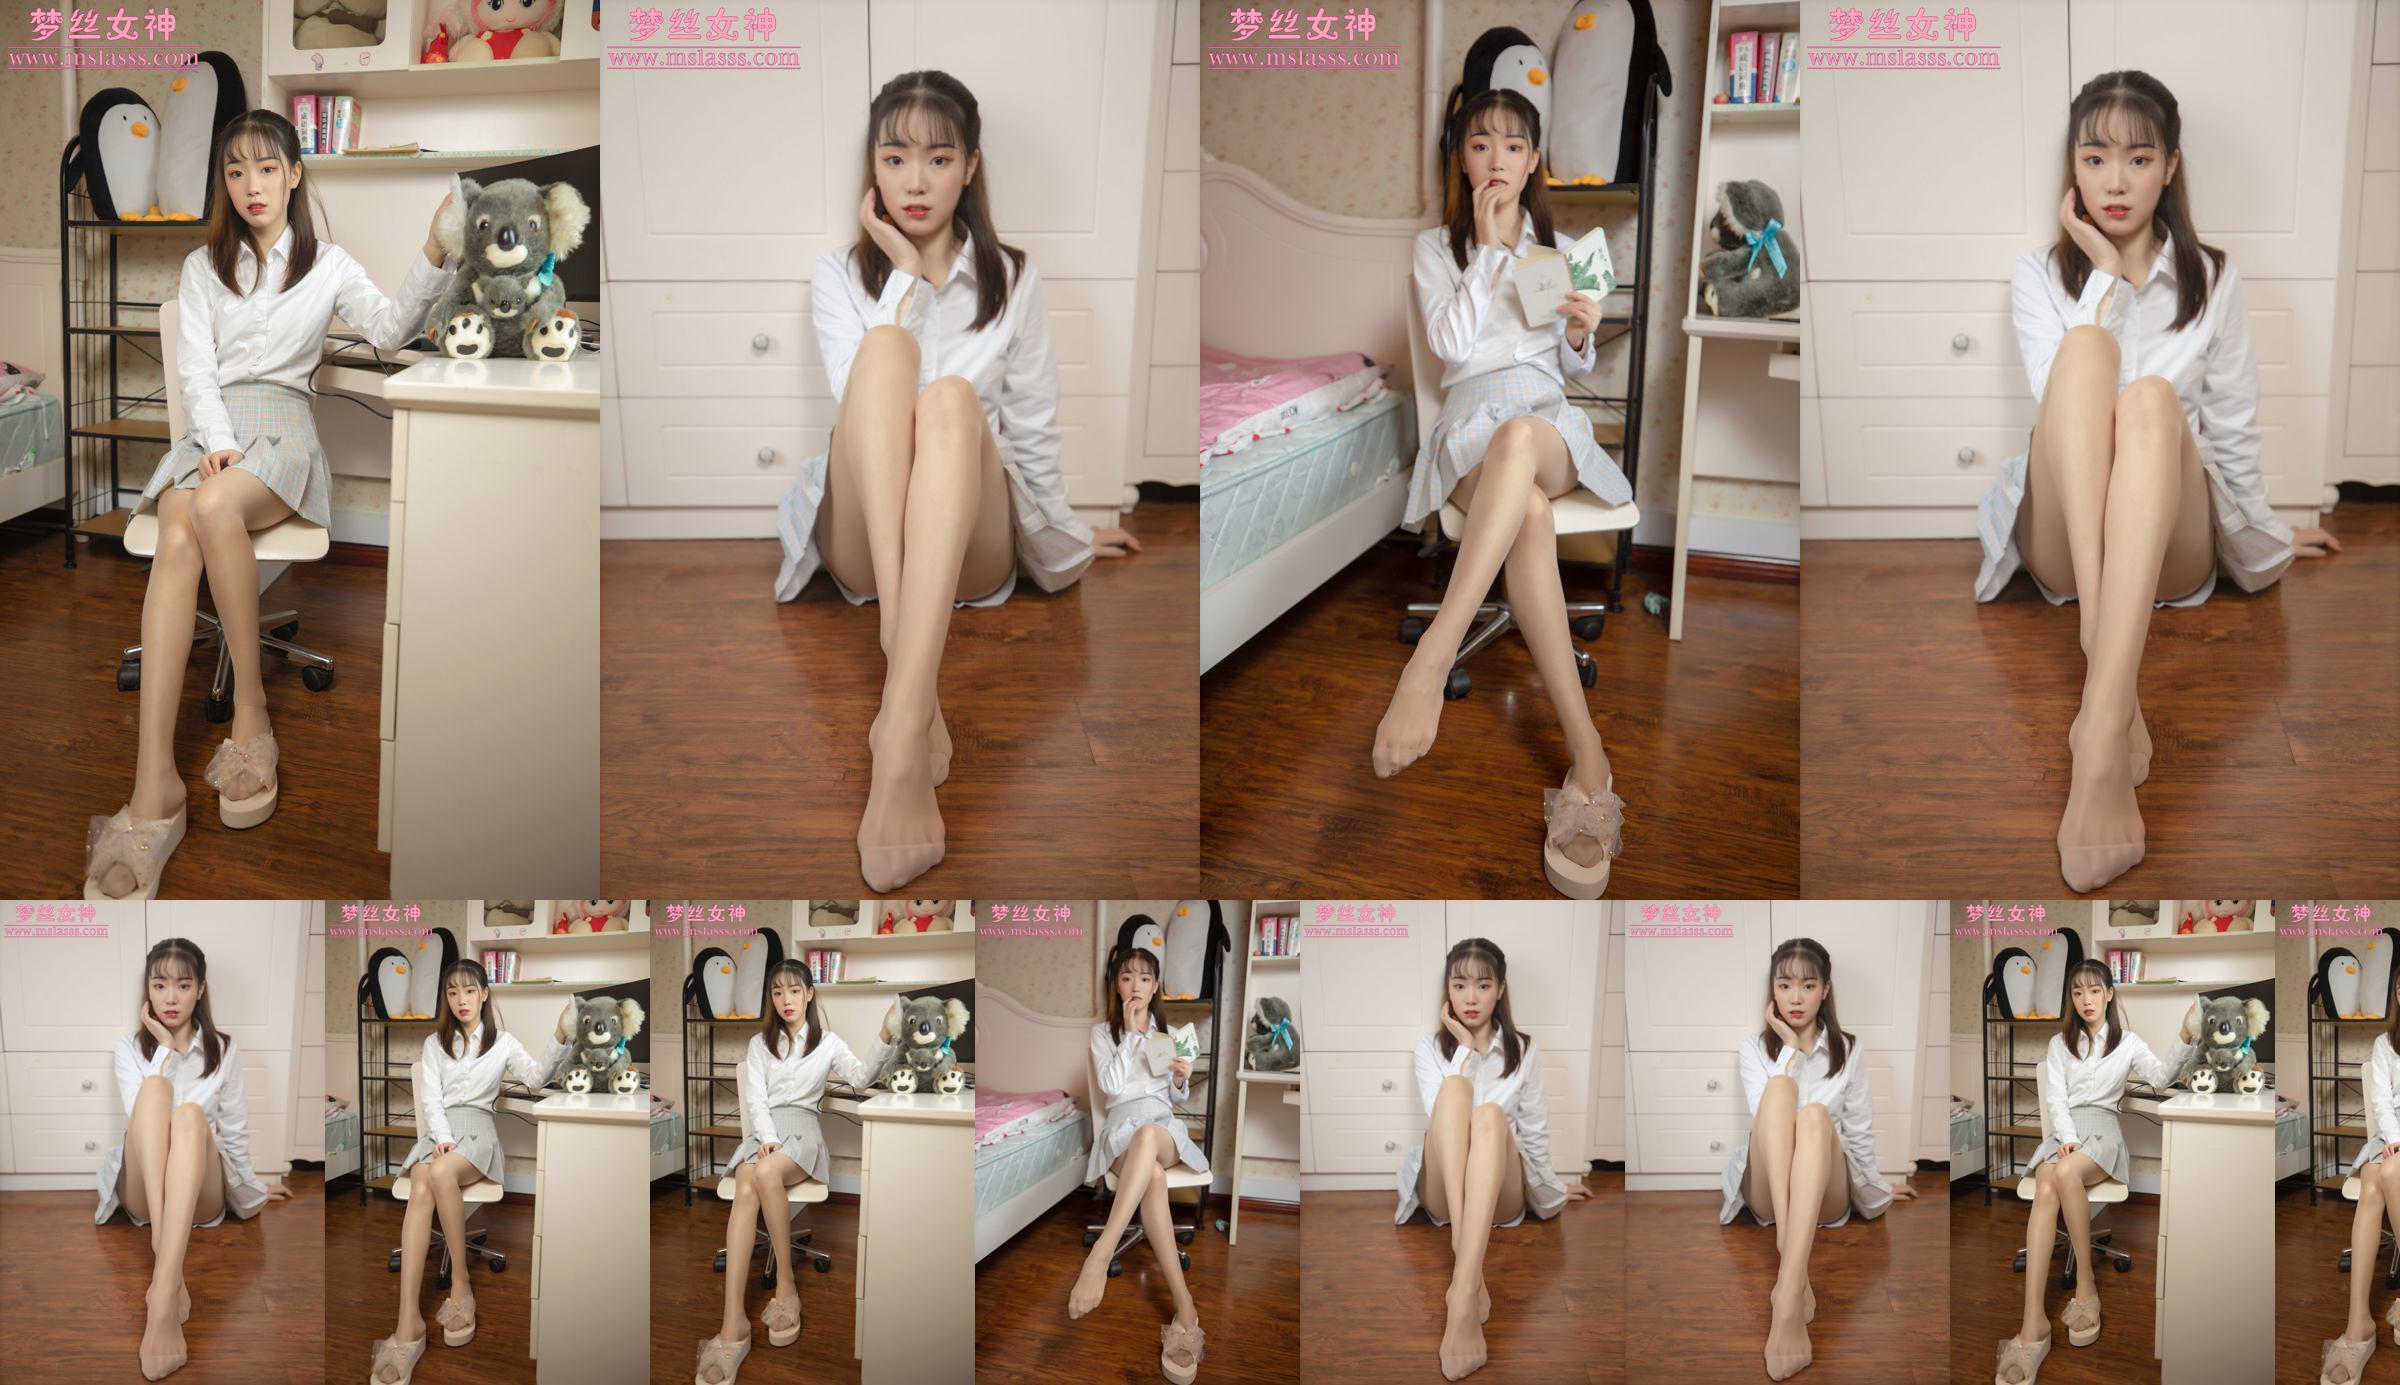 [MSLASS] Zhang Qiying new model goddess No.99bcf7 Page 1